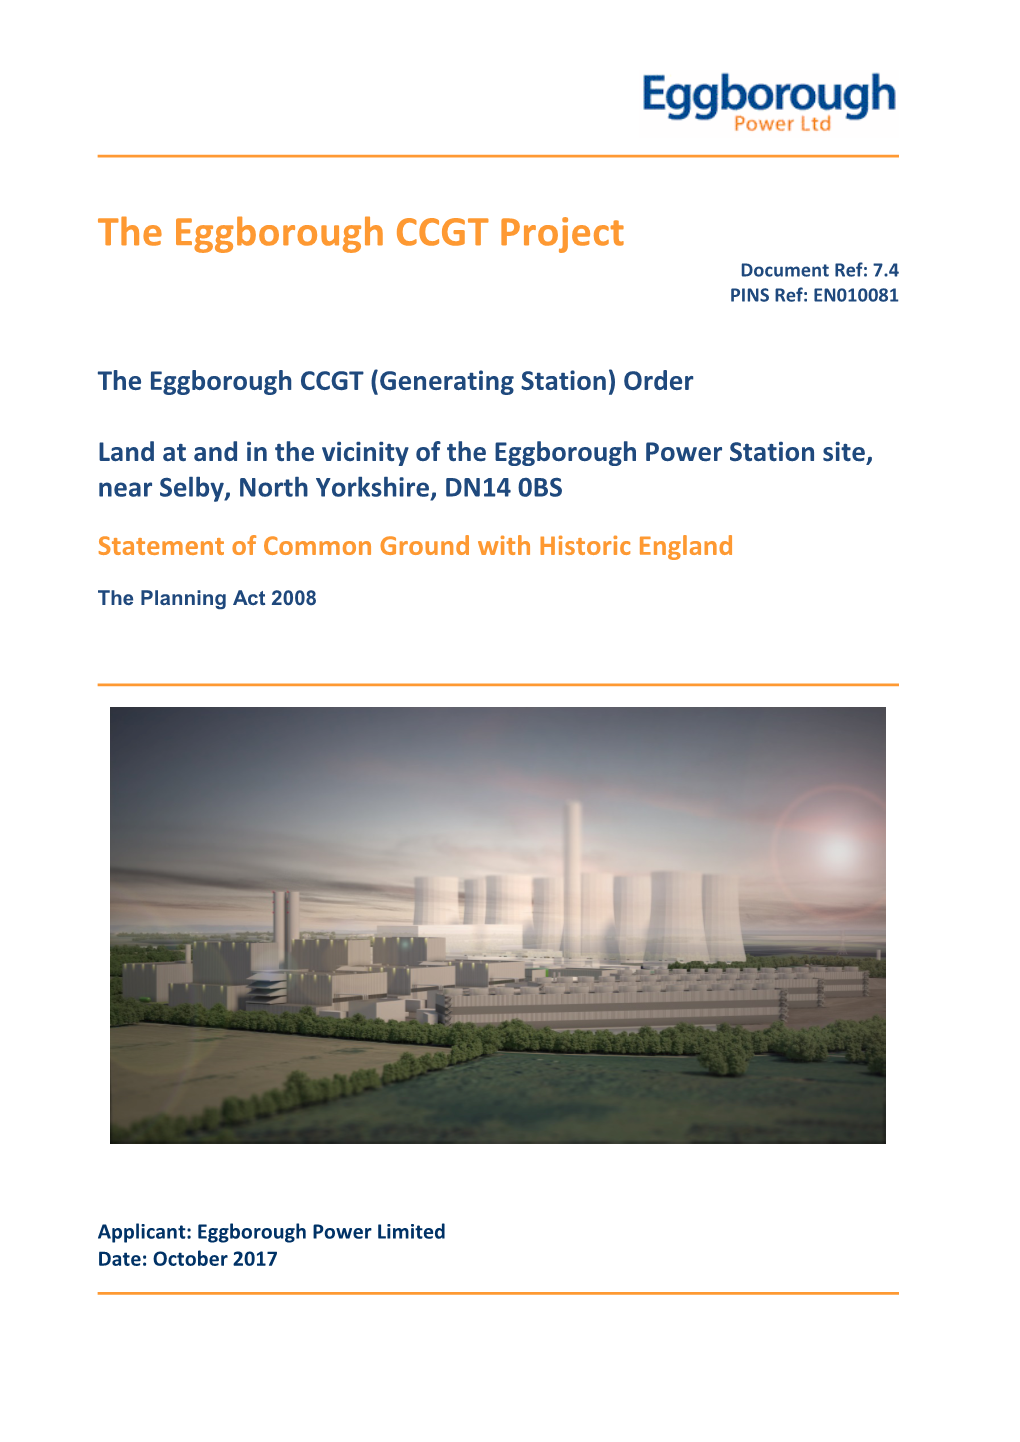 The Eggborough CCGT Project Document Ref: 7.4 PINS Ref: EN010081